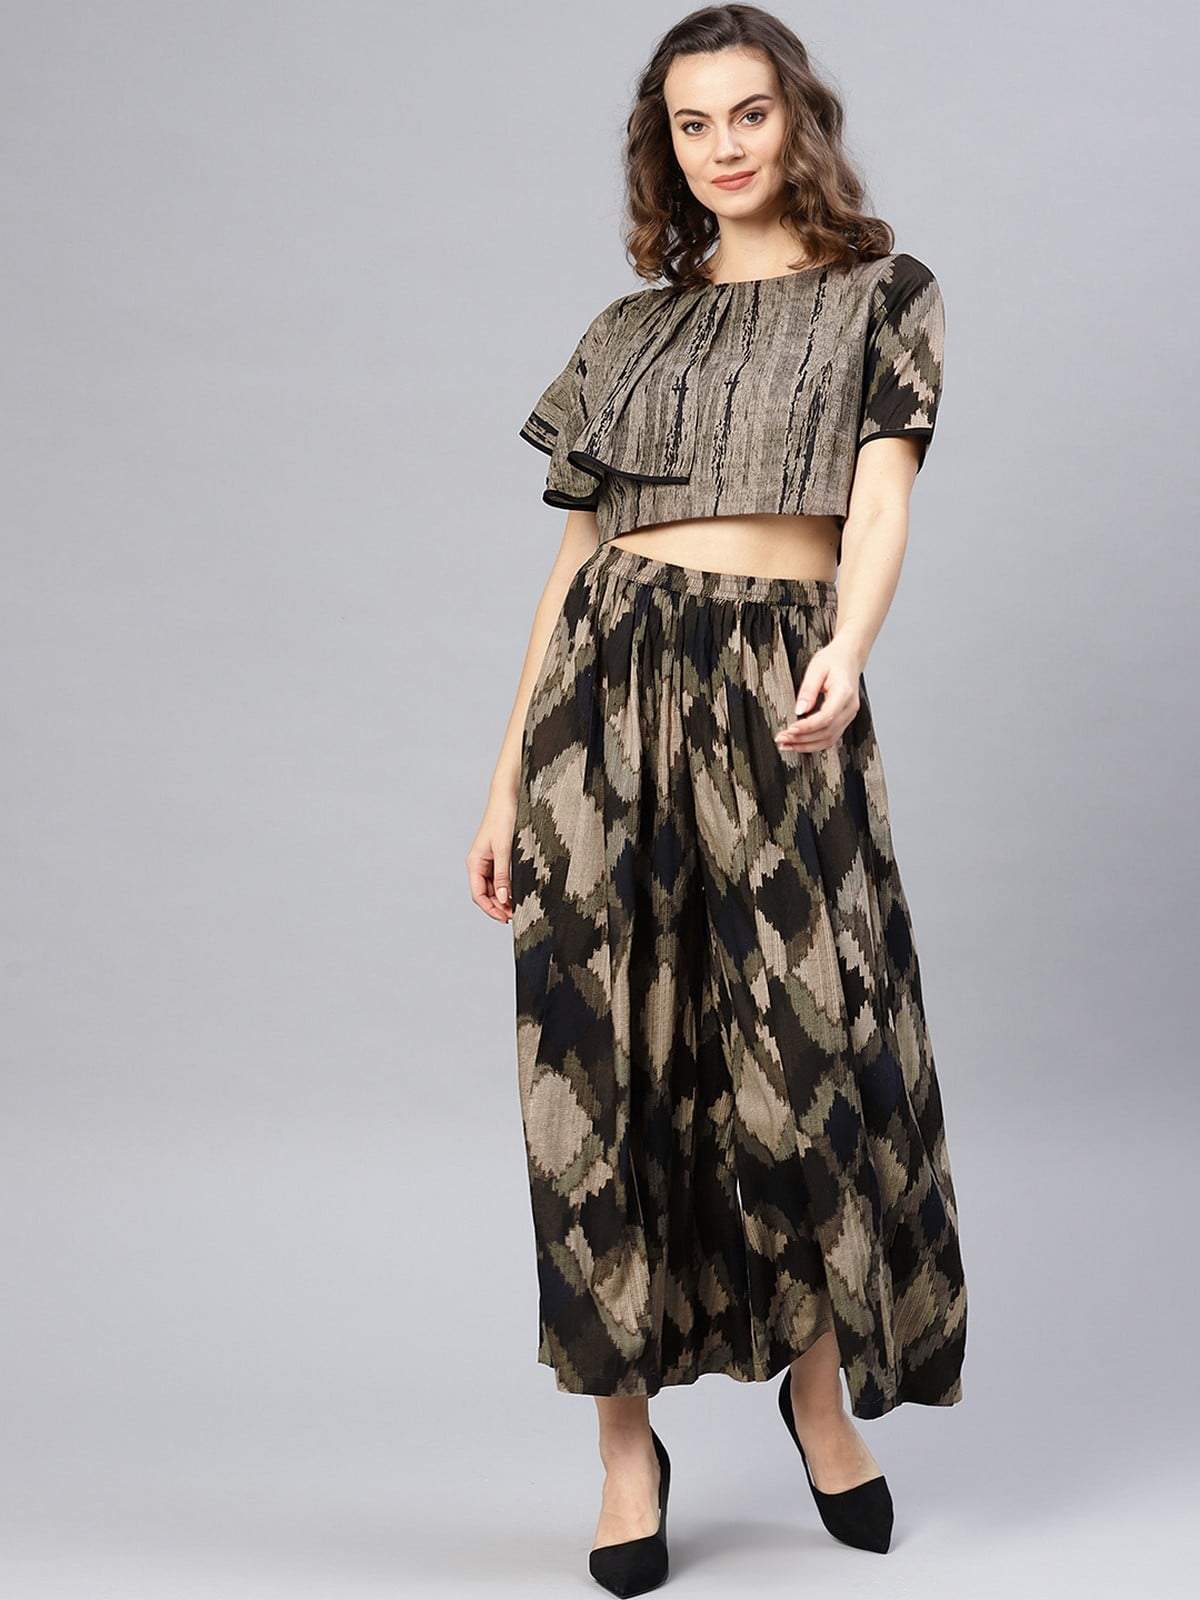 Women's Block Printed Asymmetric Top With Skirt - Pannkh